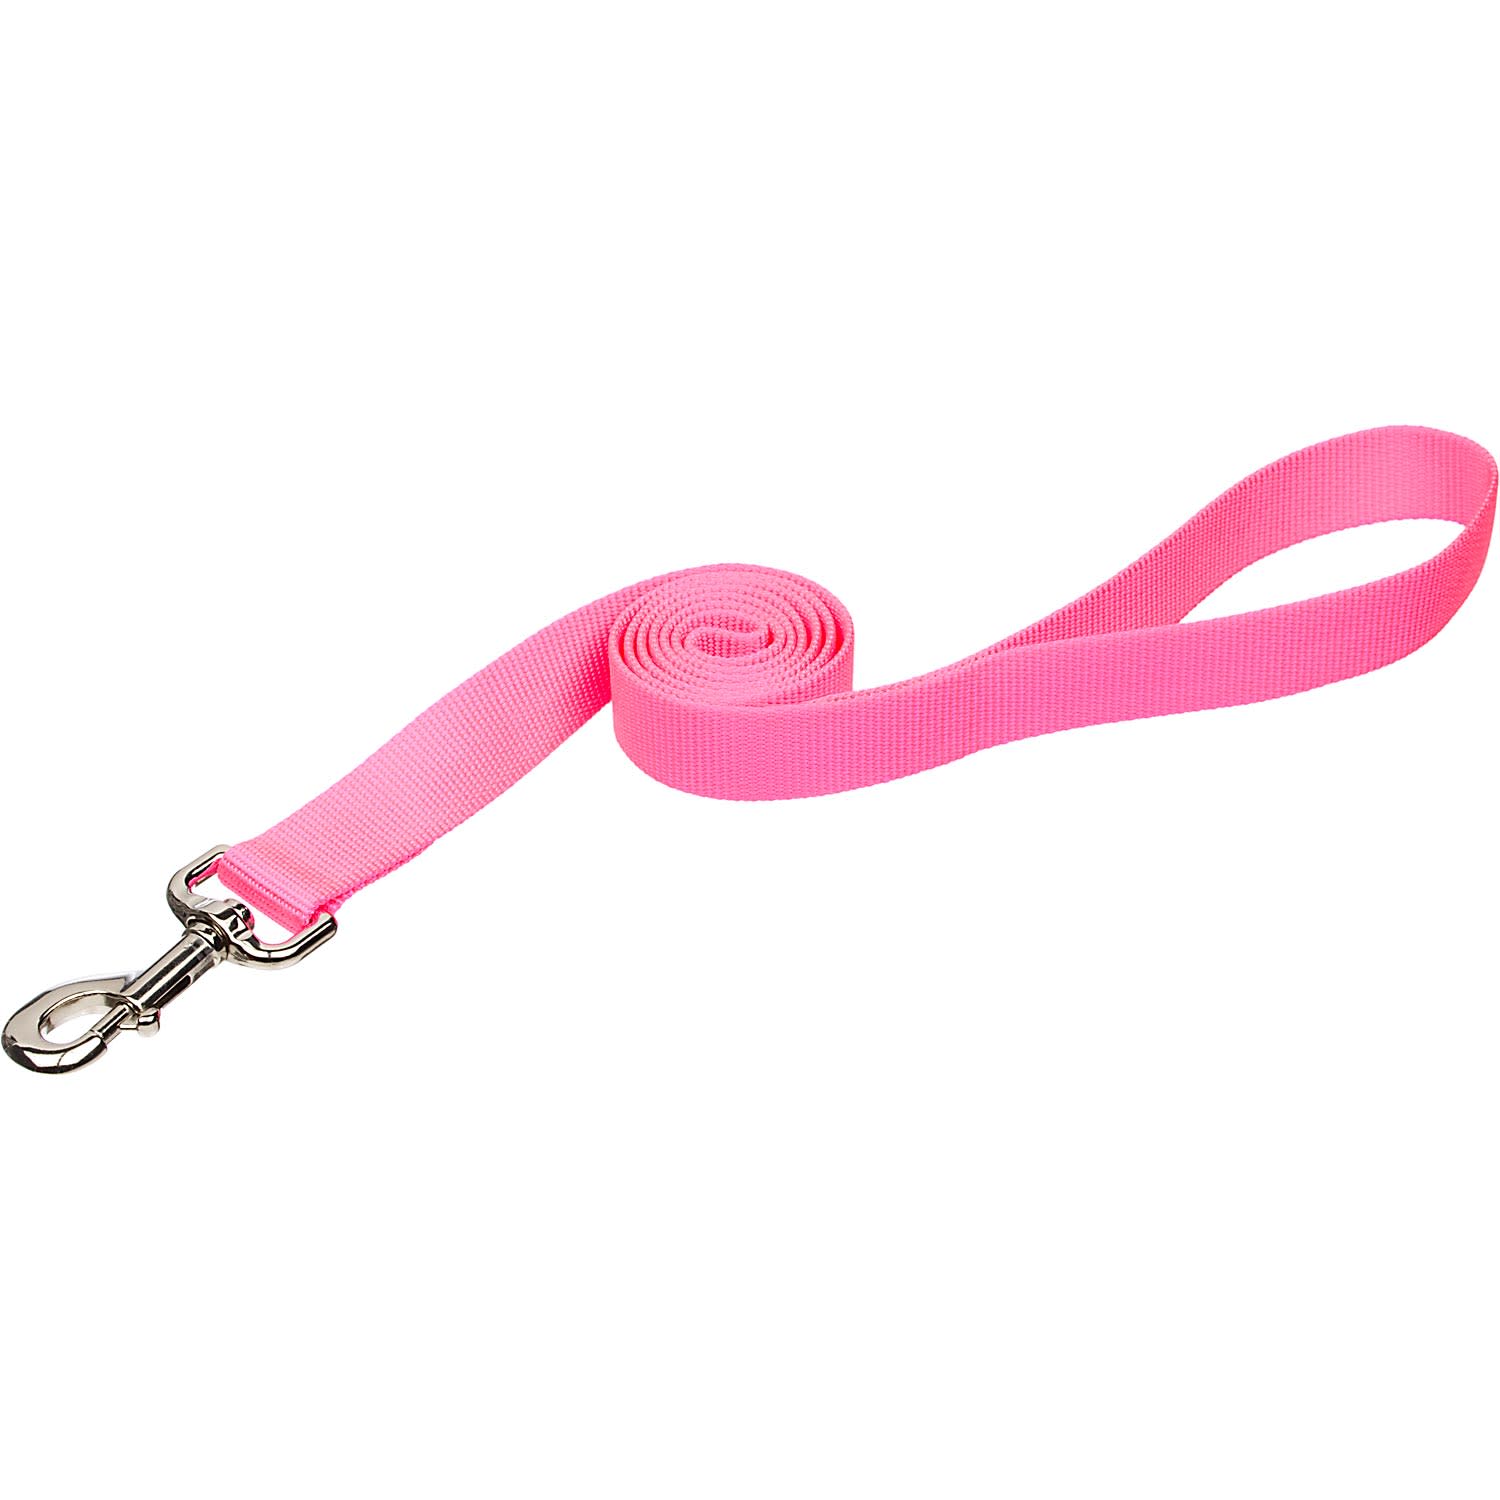 Neon Pink ocelot dog leash pink dog leash velvet dog leash textile dog leash animal printed dog leash parody dog leash